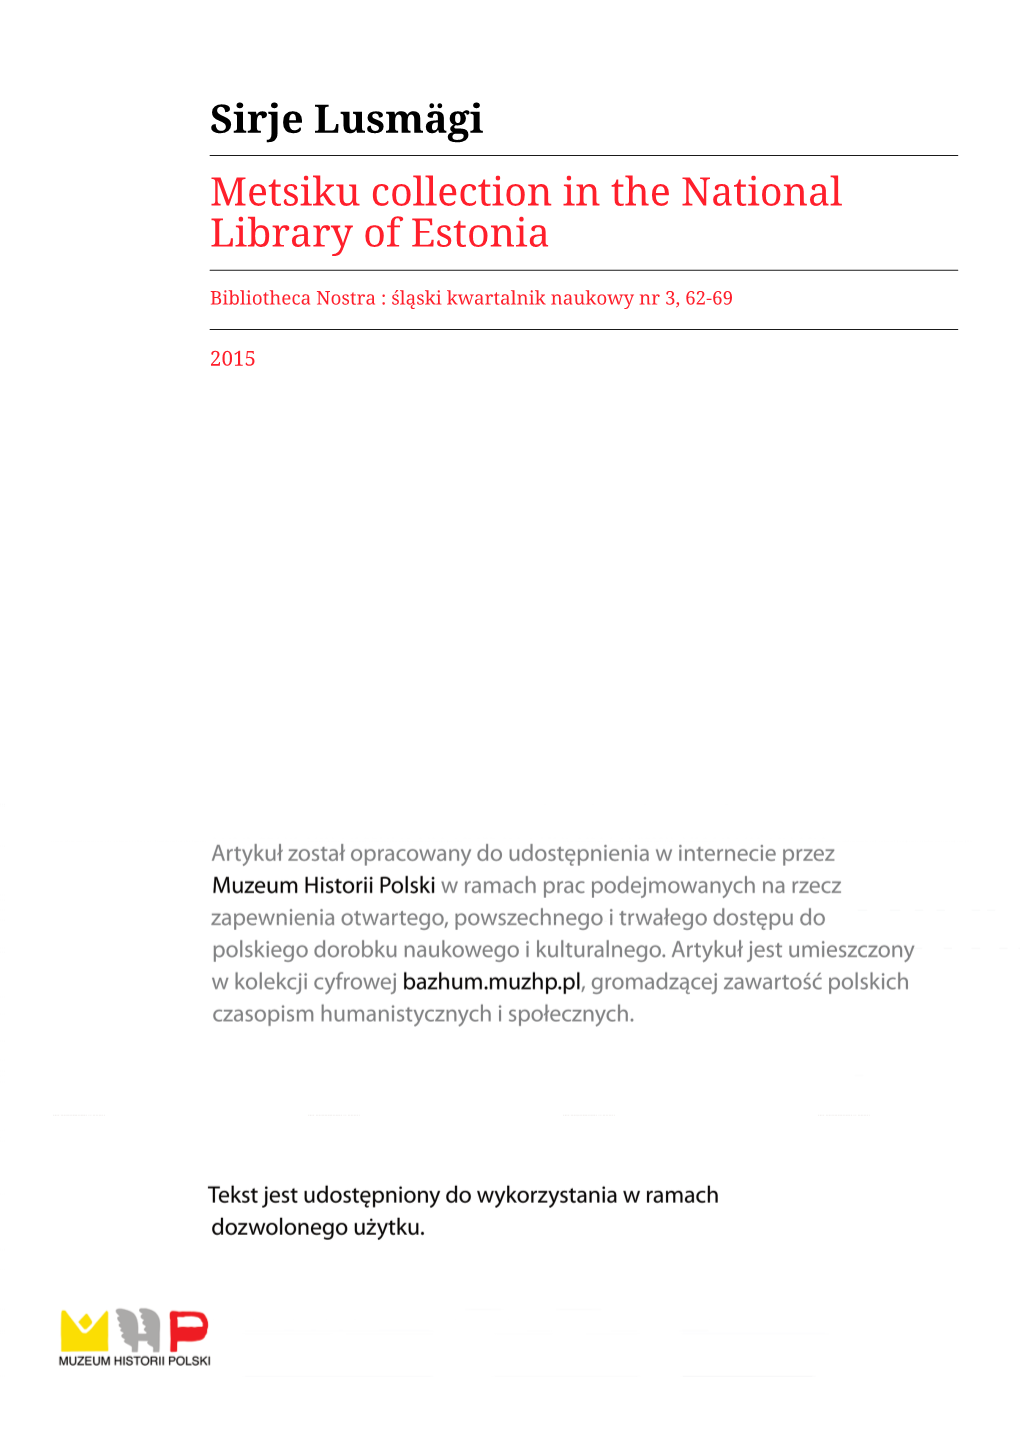 Sirje Lusmägi Metsiku Collection in the National Library of Estonia